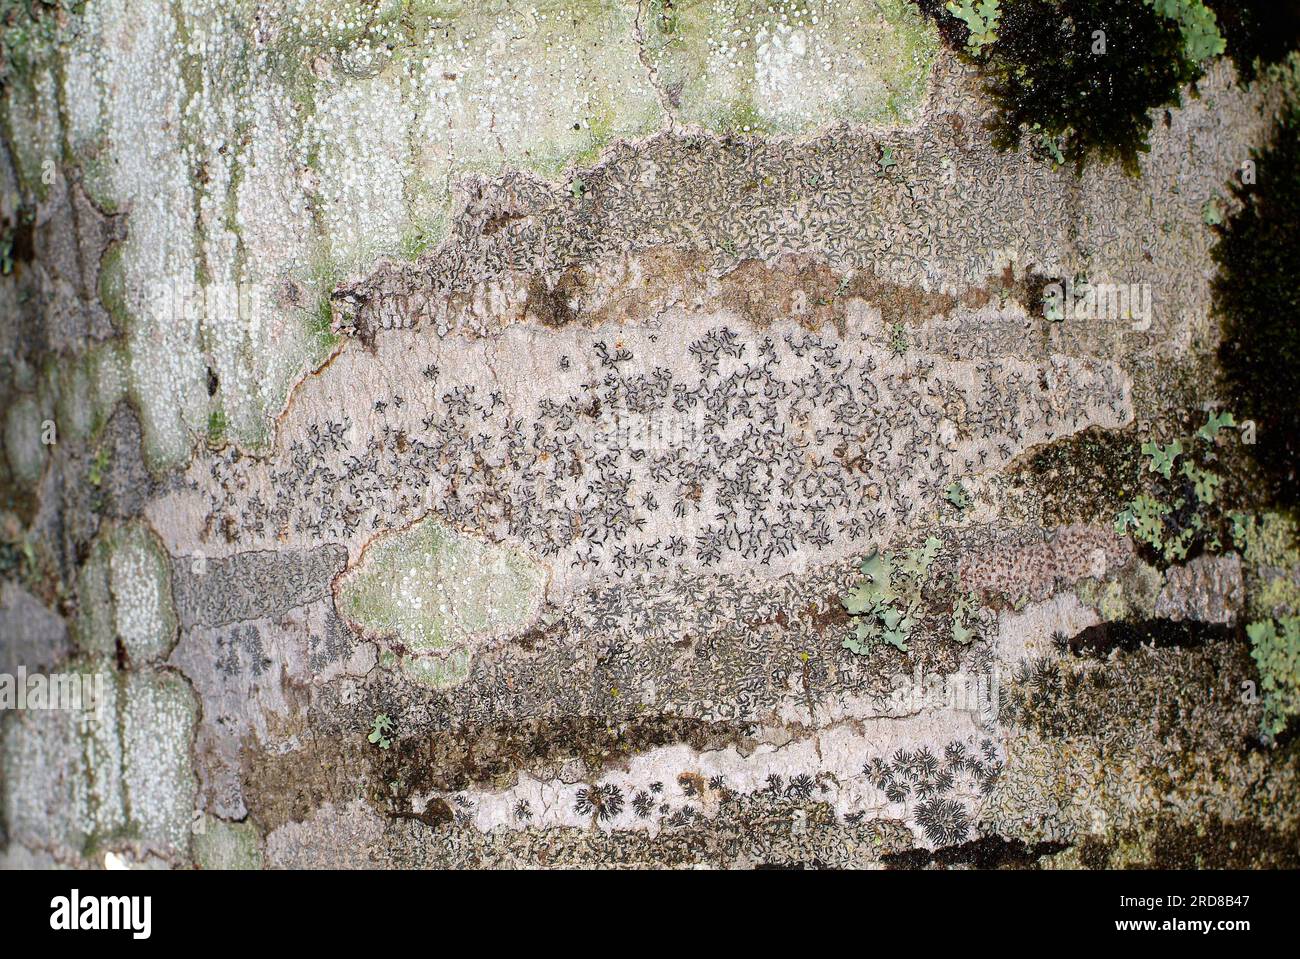 Script lichen or secret writing lichen (Graphis scripta) is a crustose lichen with black and curved apothecia. Fungi. Ascomycota. Graphidaceae. This p Stock Photo